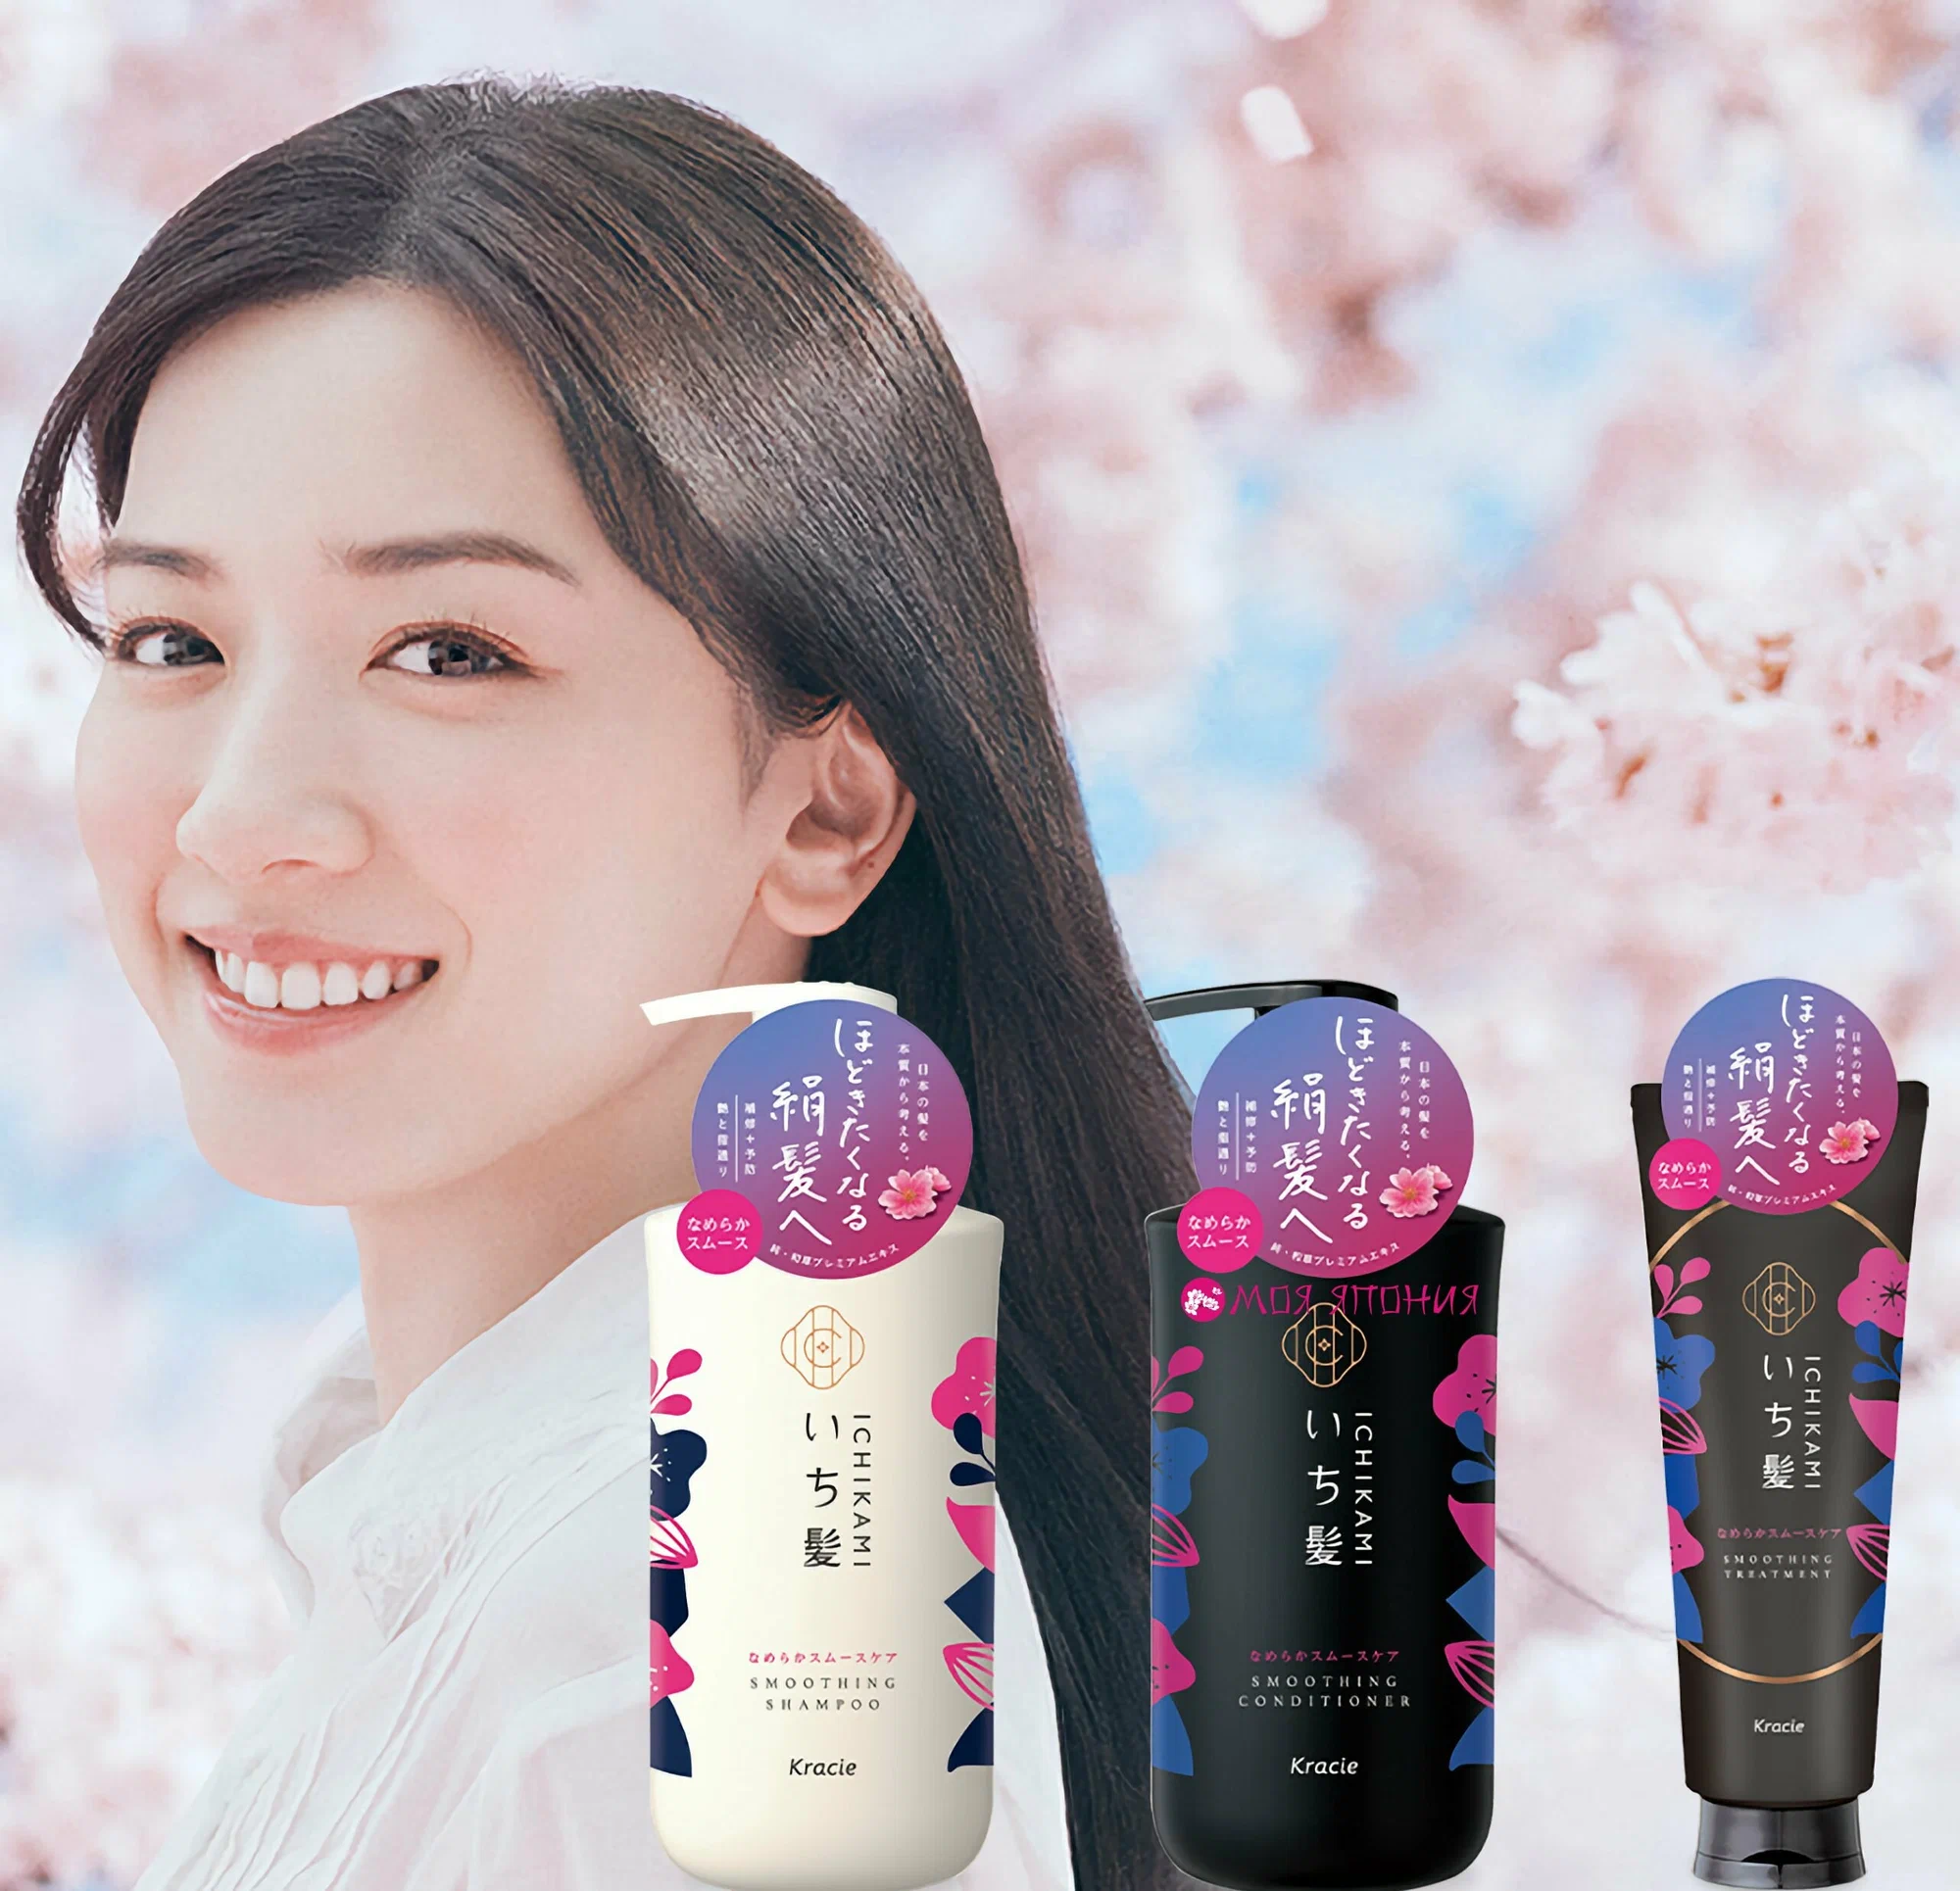 KRACIE Ichikami Smooth Care Shampoo Шампунь для поврежденных волос, разглаживающий, аромат вишни, 480гр.